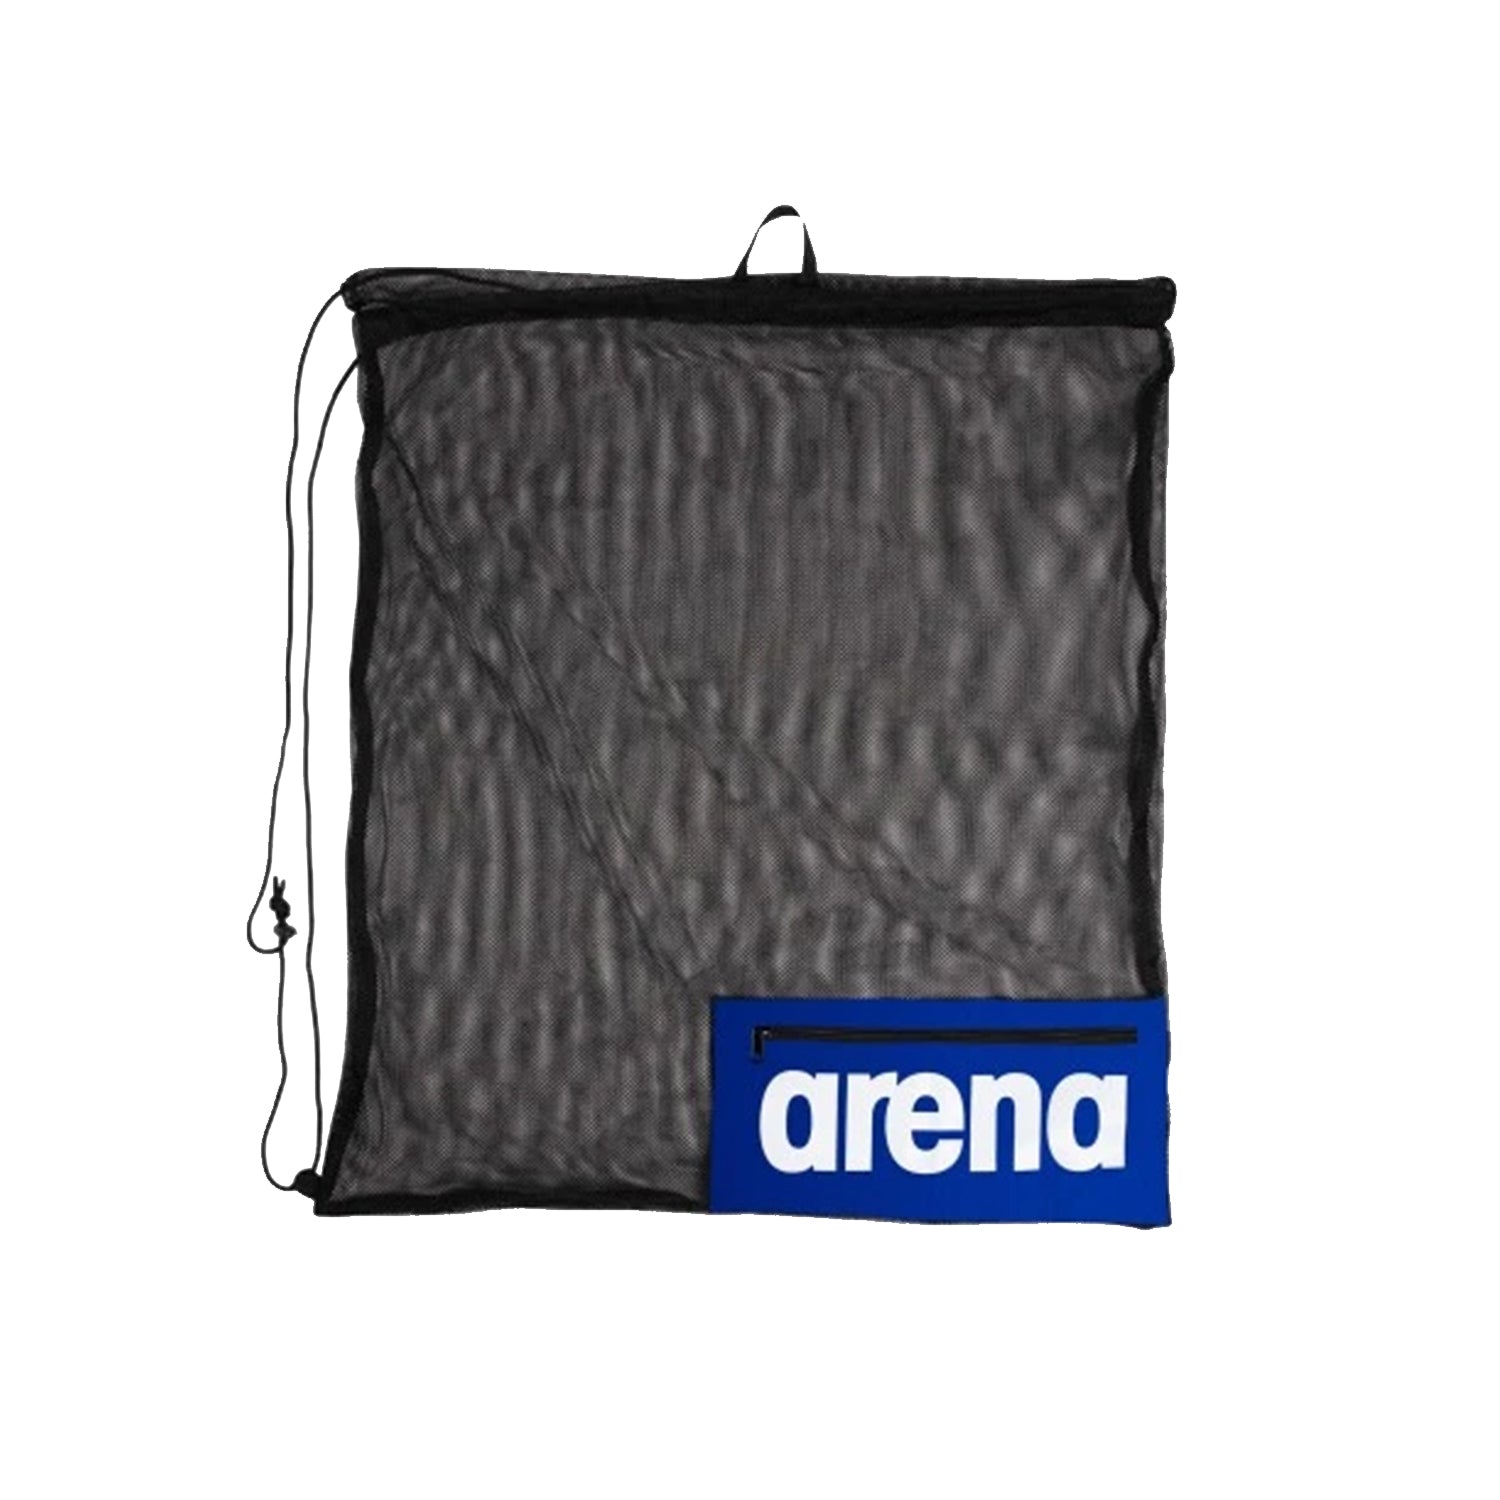 Arena XL Mesh Backpack - Assorted - Best Price online Prokicksports.com